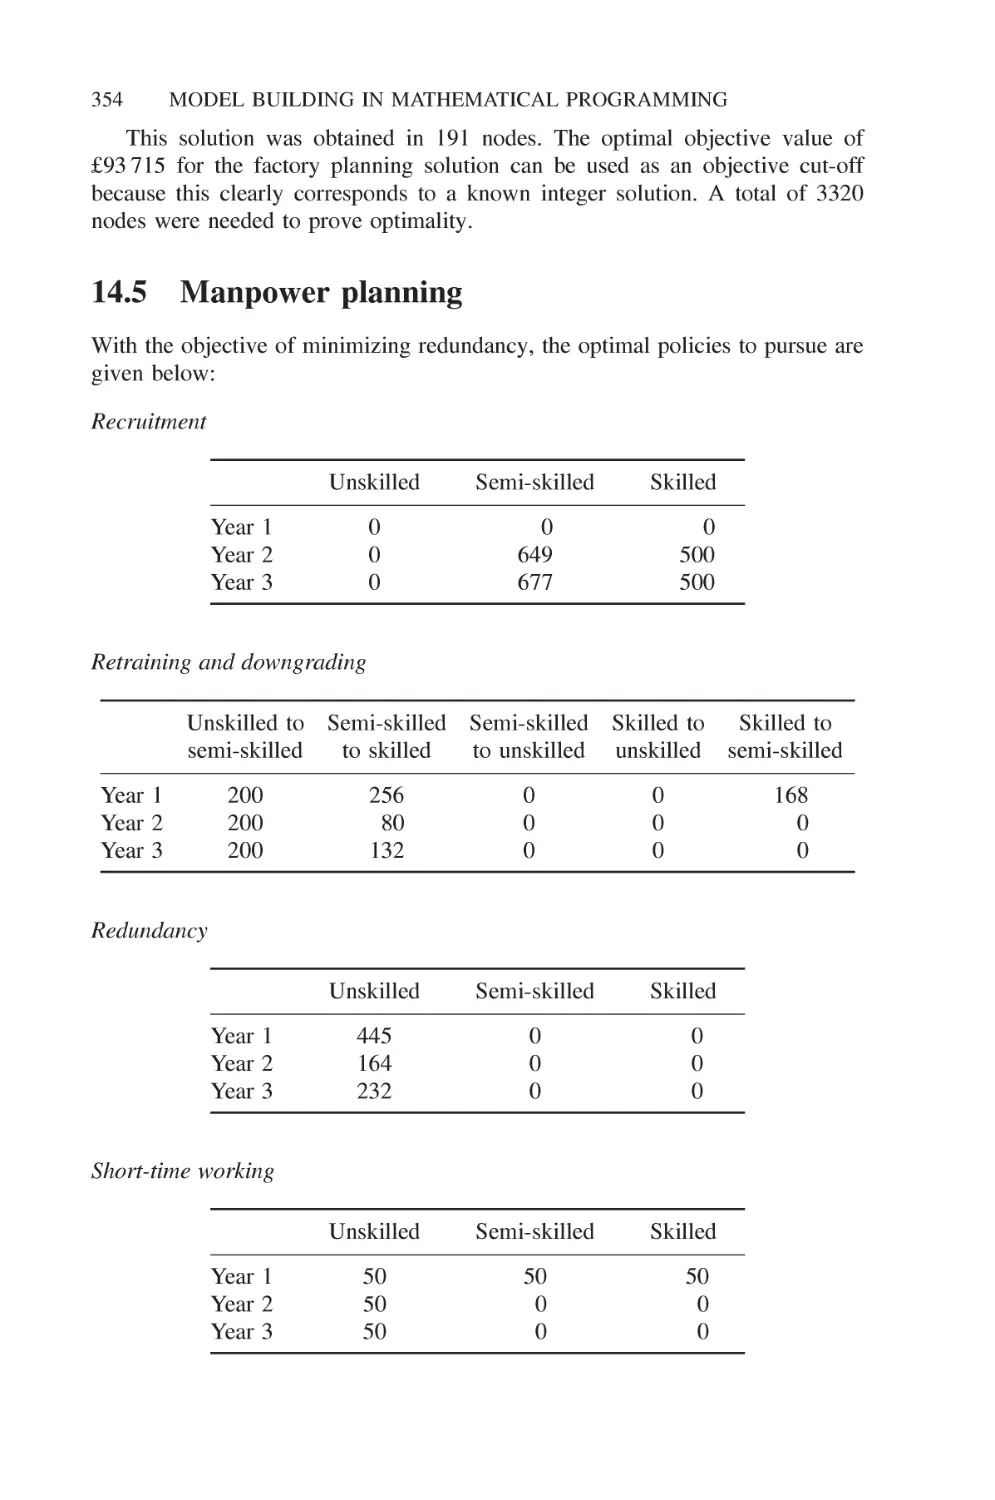 14.5 Manpower planning